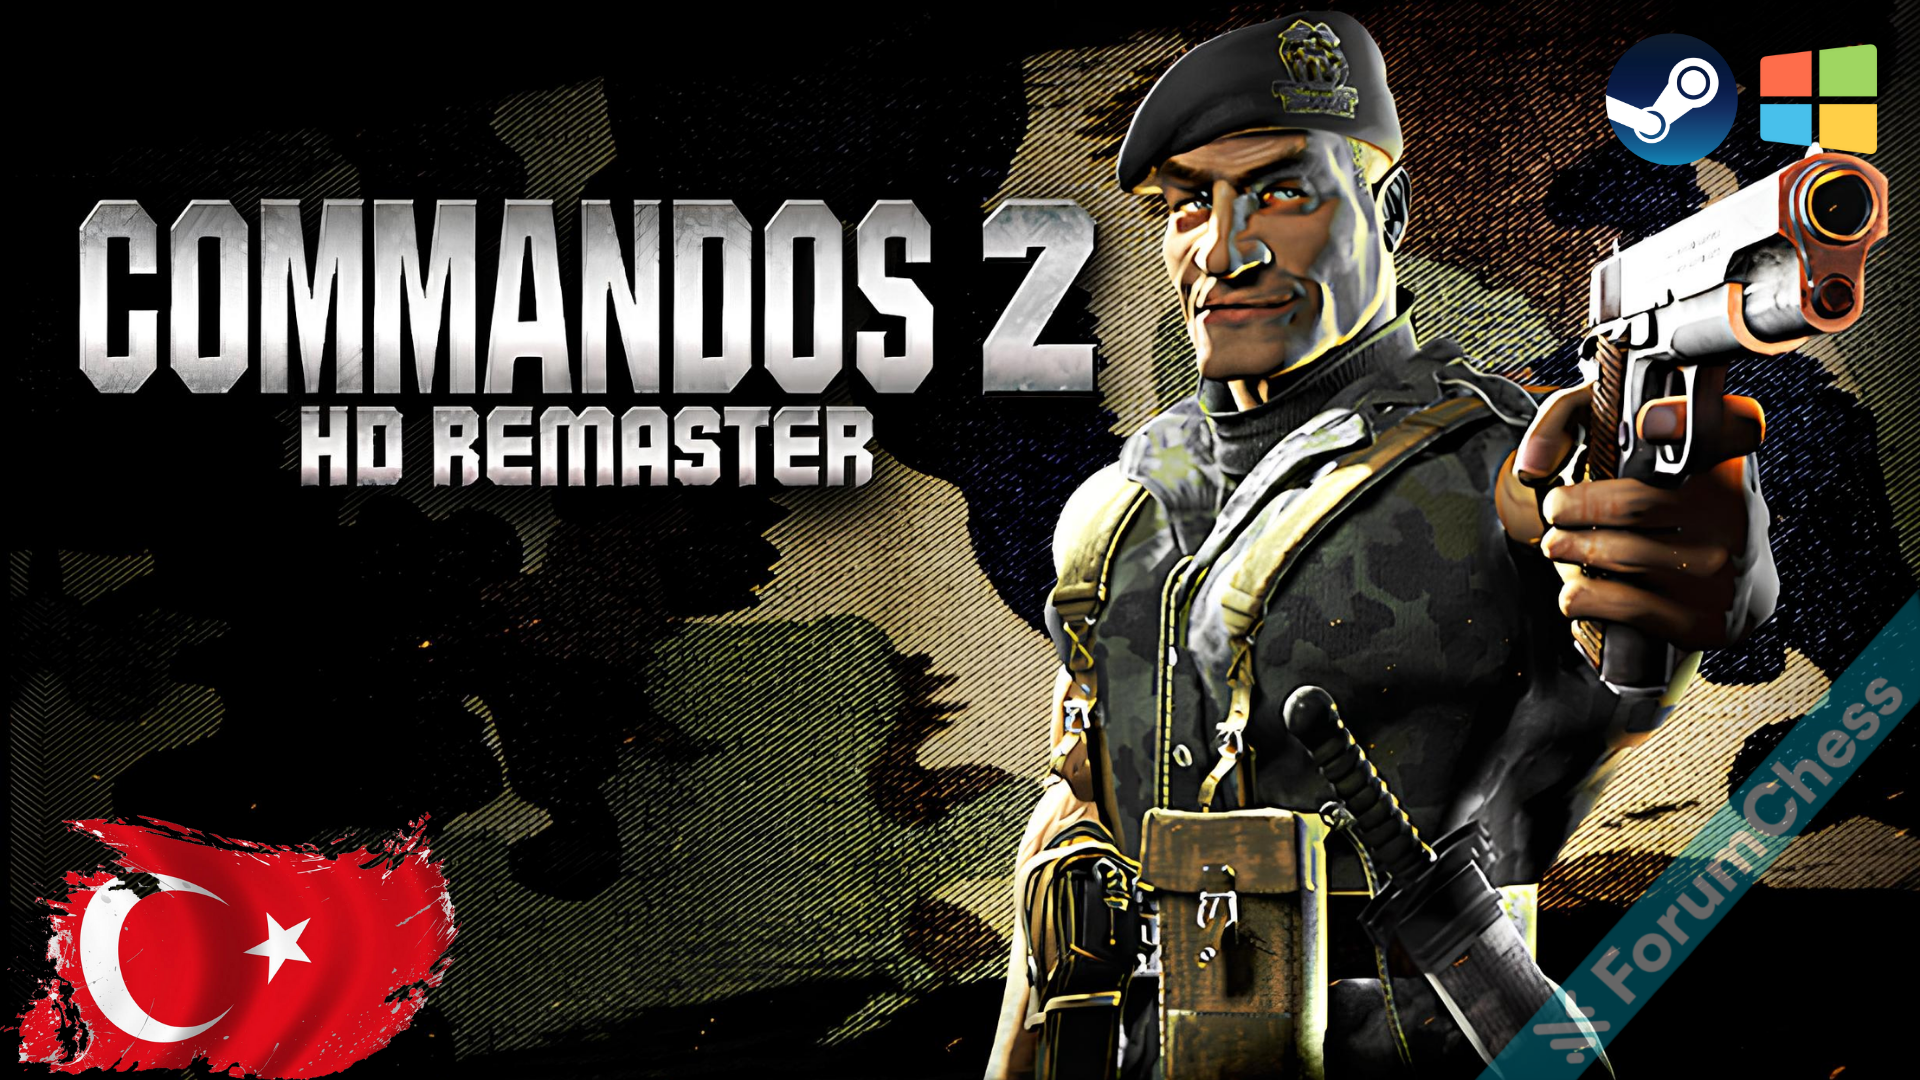 Commandos 2 HD Remastered Türkçe Yama.png